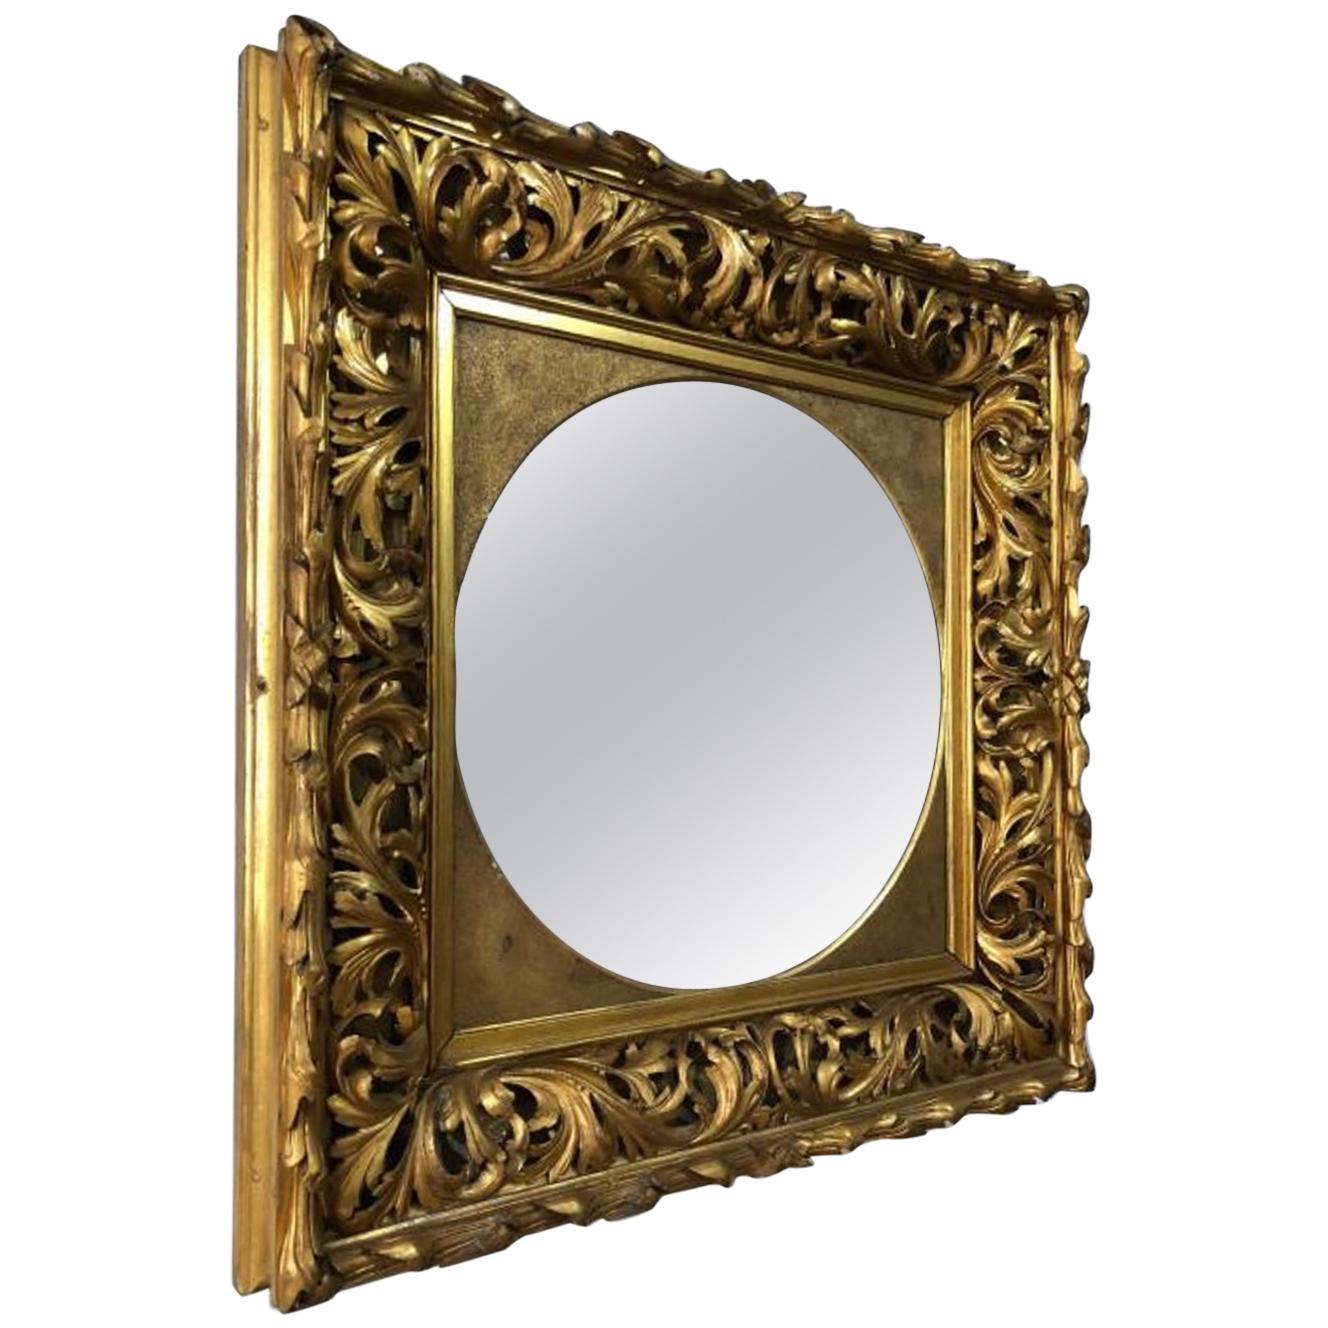 Dreamlike Original Baroque Florentine Mirror with Leaf Carved Frame For Sale